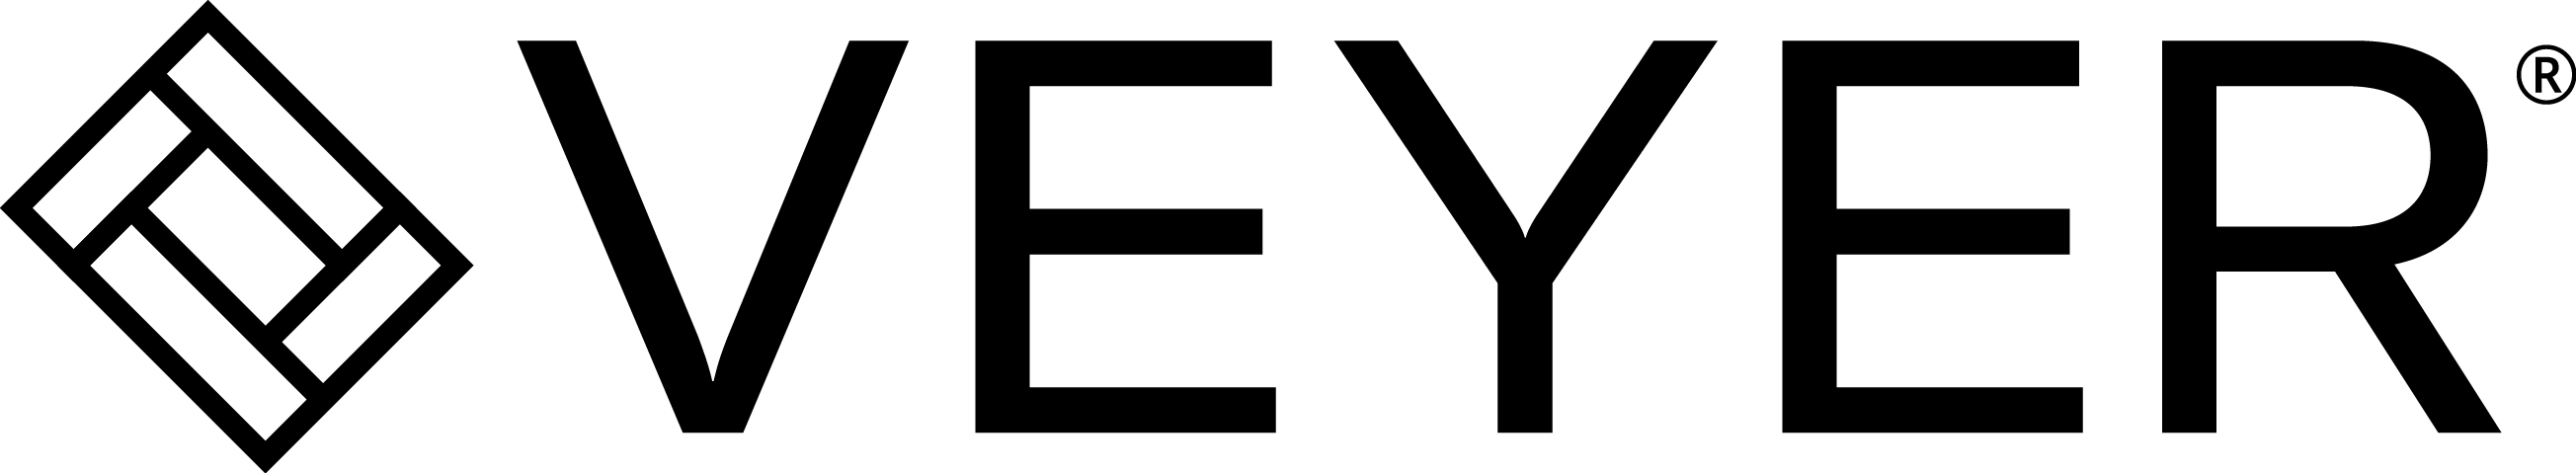 Veyer Logo Horizontal